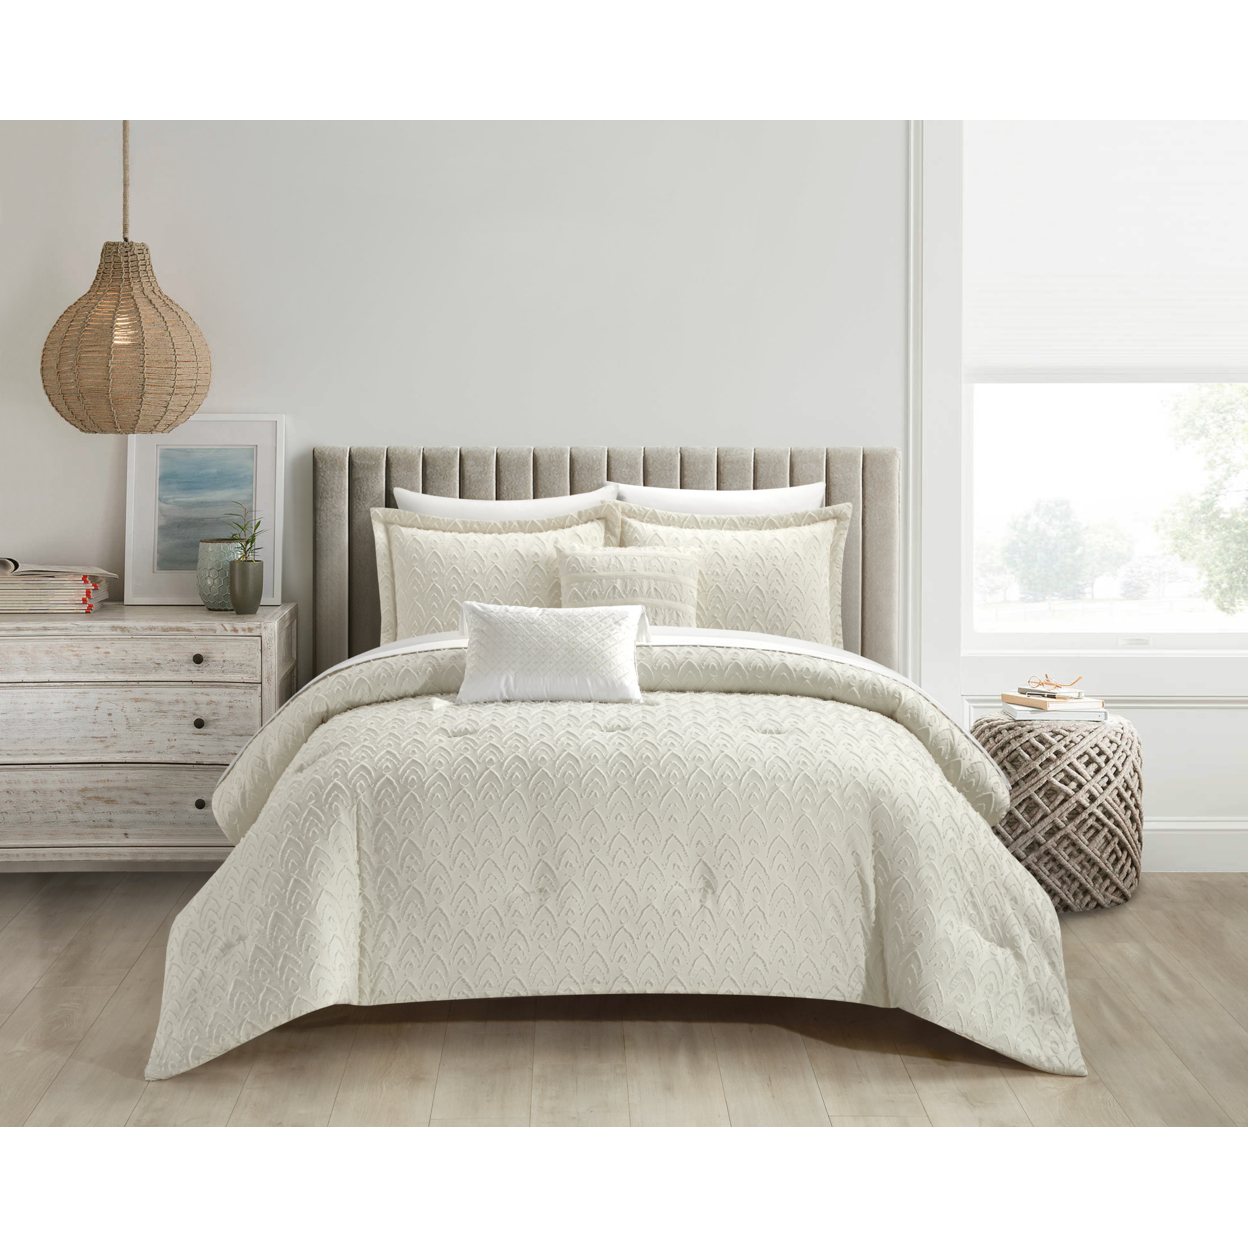 Deign 5 Piece Comforter Set Clip Jacquard Geometric Pattern Design Bedding - Beige, Queen